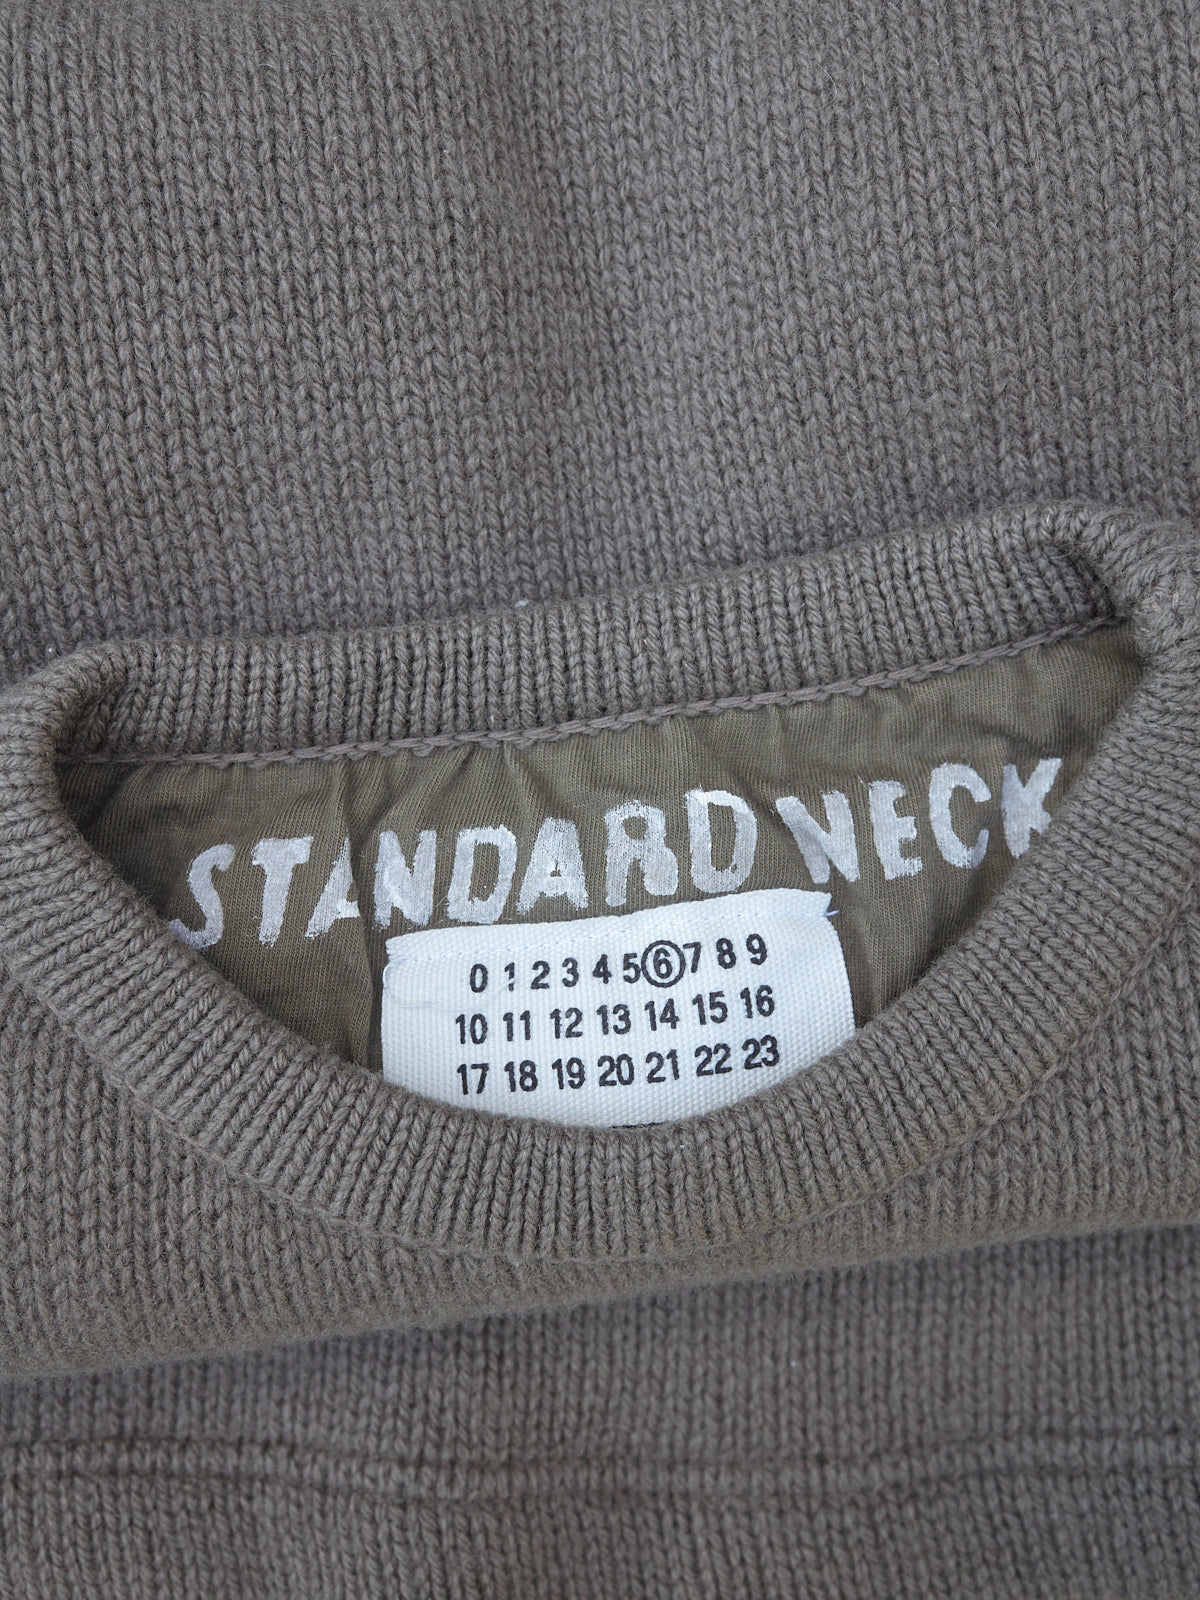 Maison Martin Margiela 6 1990s khaki wool "STANDARD NECK" zip jumper - size M S